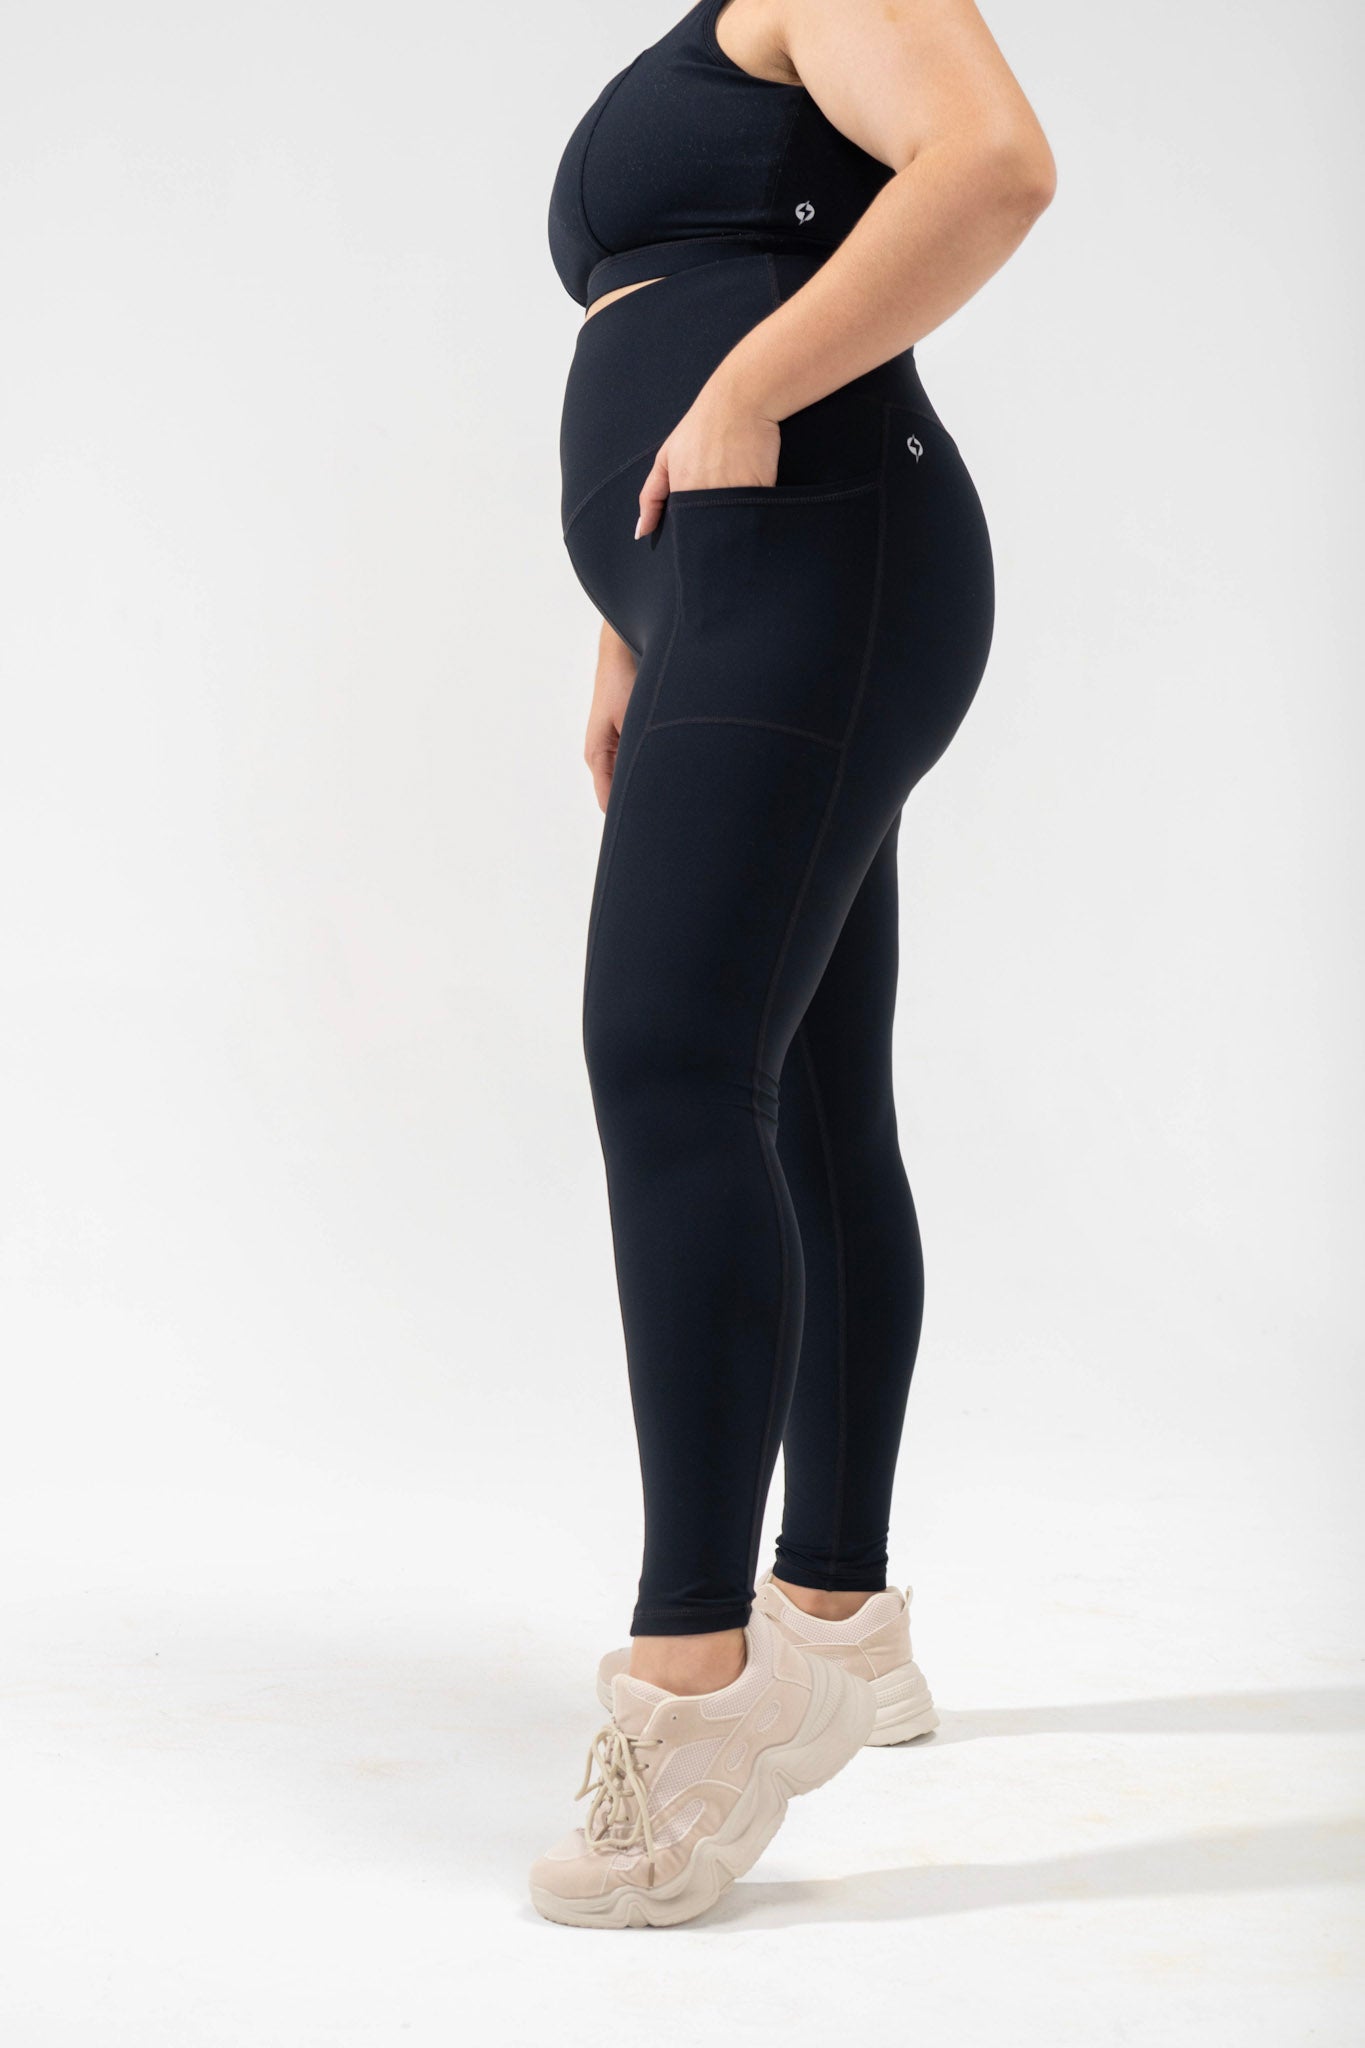 timeless legging pocket legging in black, POPFLEX cute activewear, plus size model